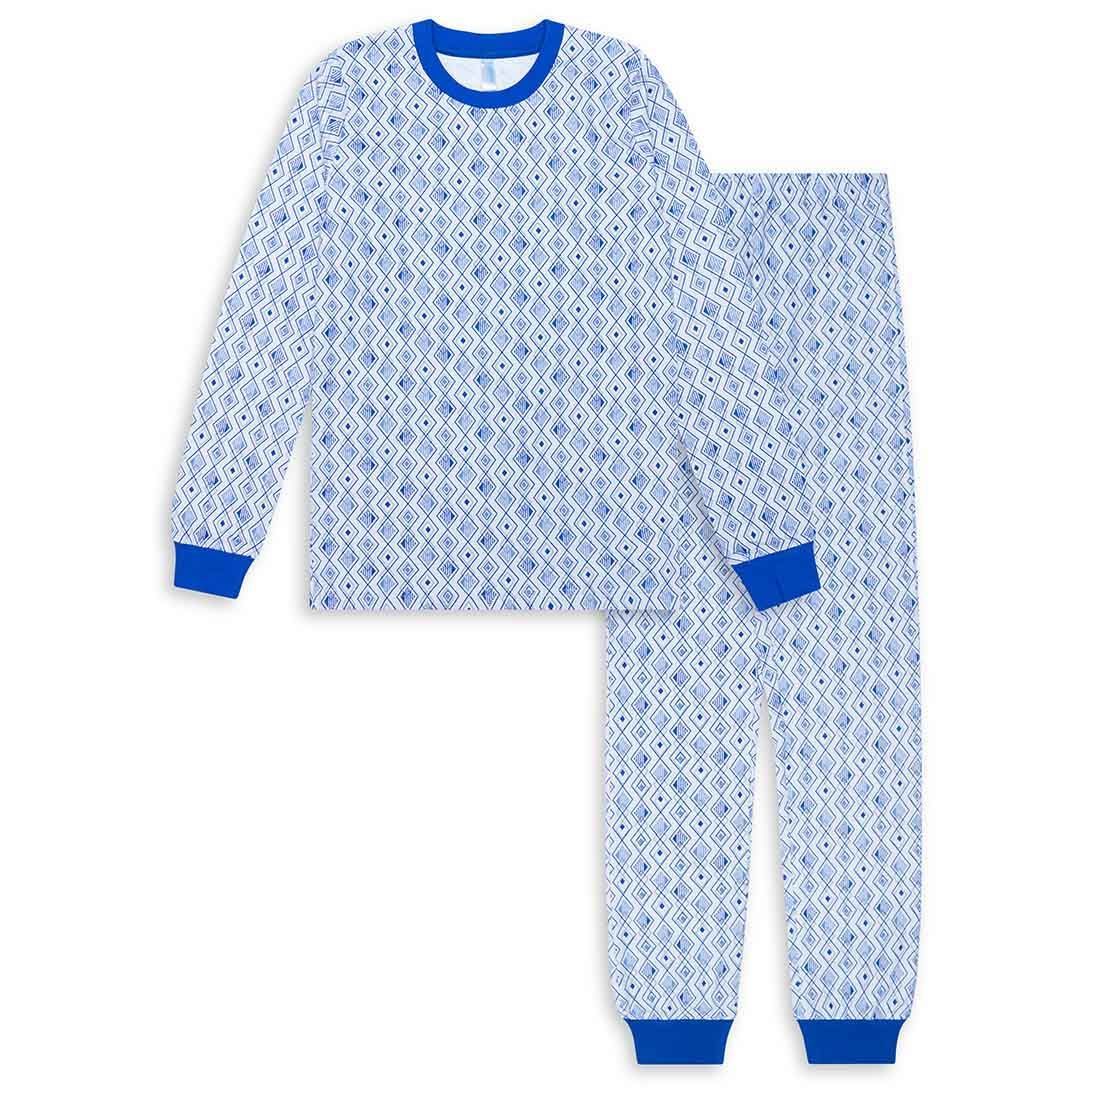 Пижама для мальчика TAKRO 0631 футболка шорты Текстиль Центр 